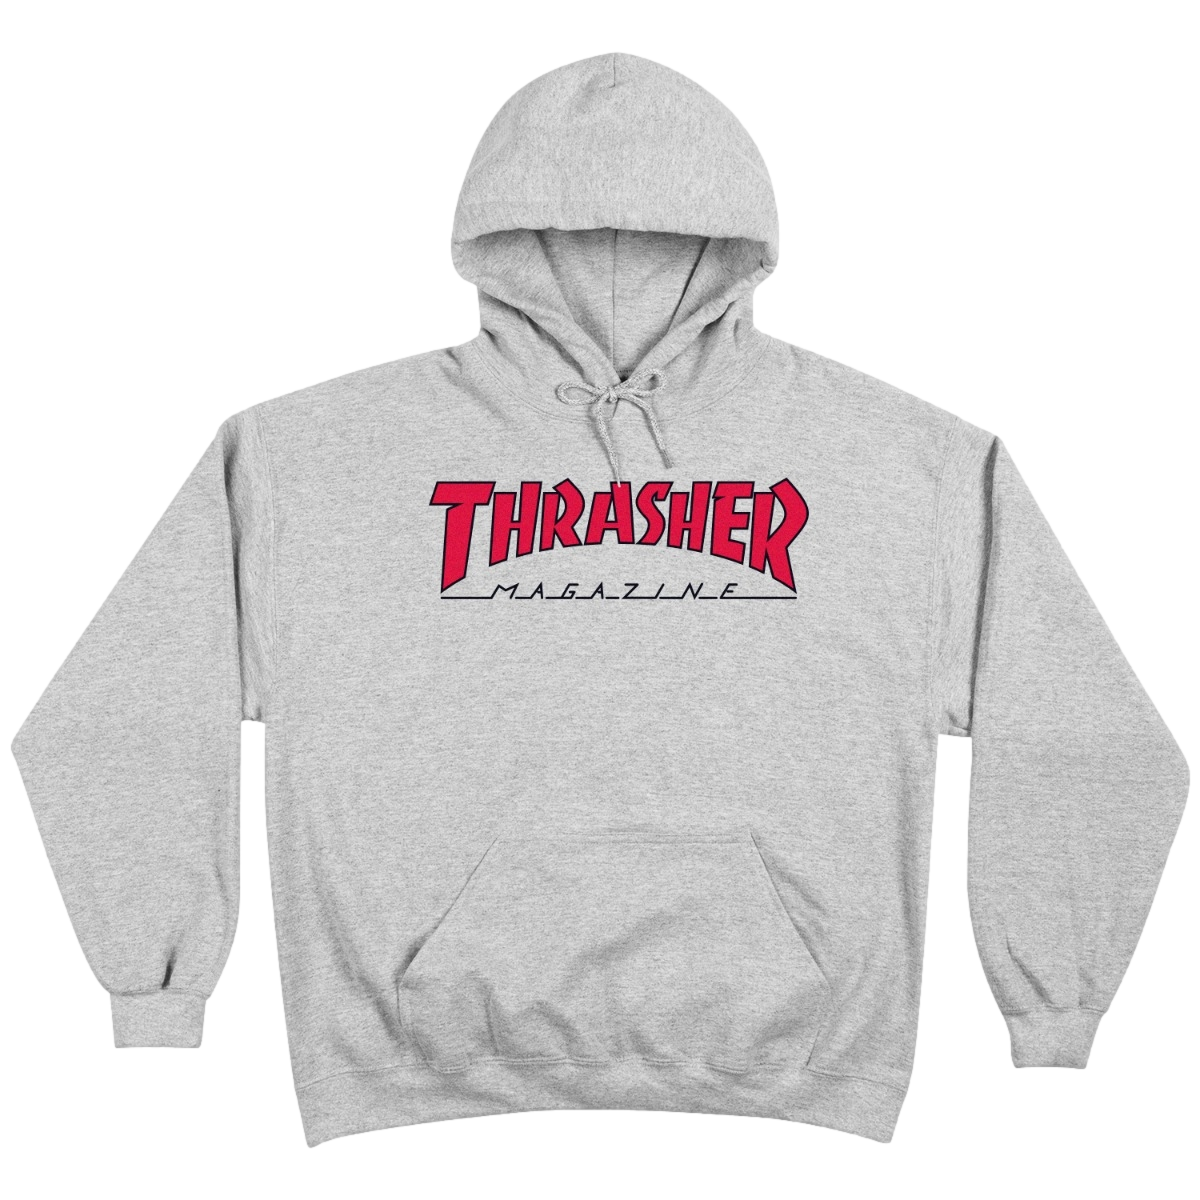 Thrasher Skate Mag Pullover Hoodie